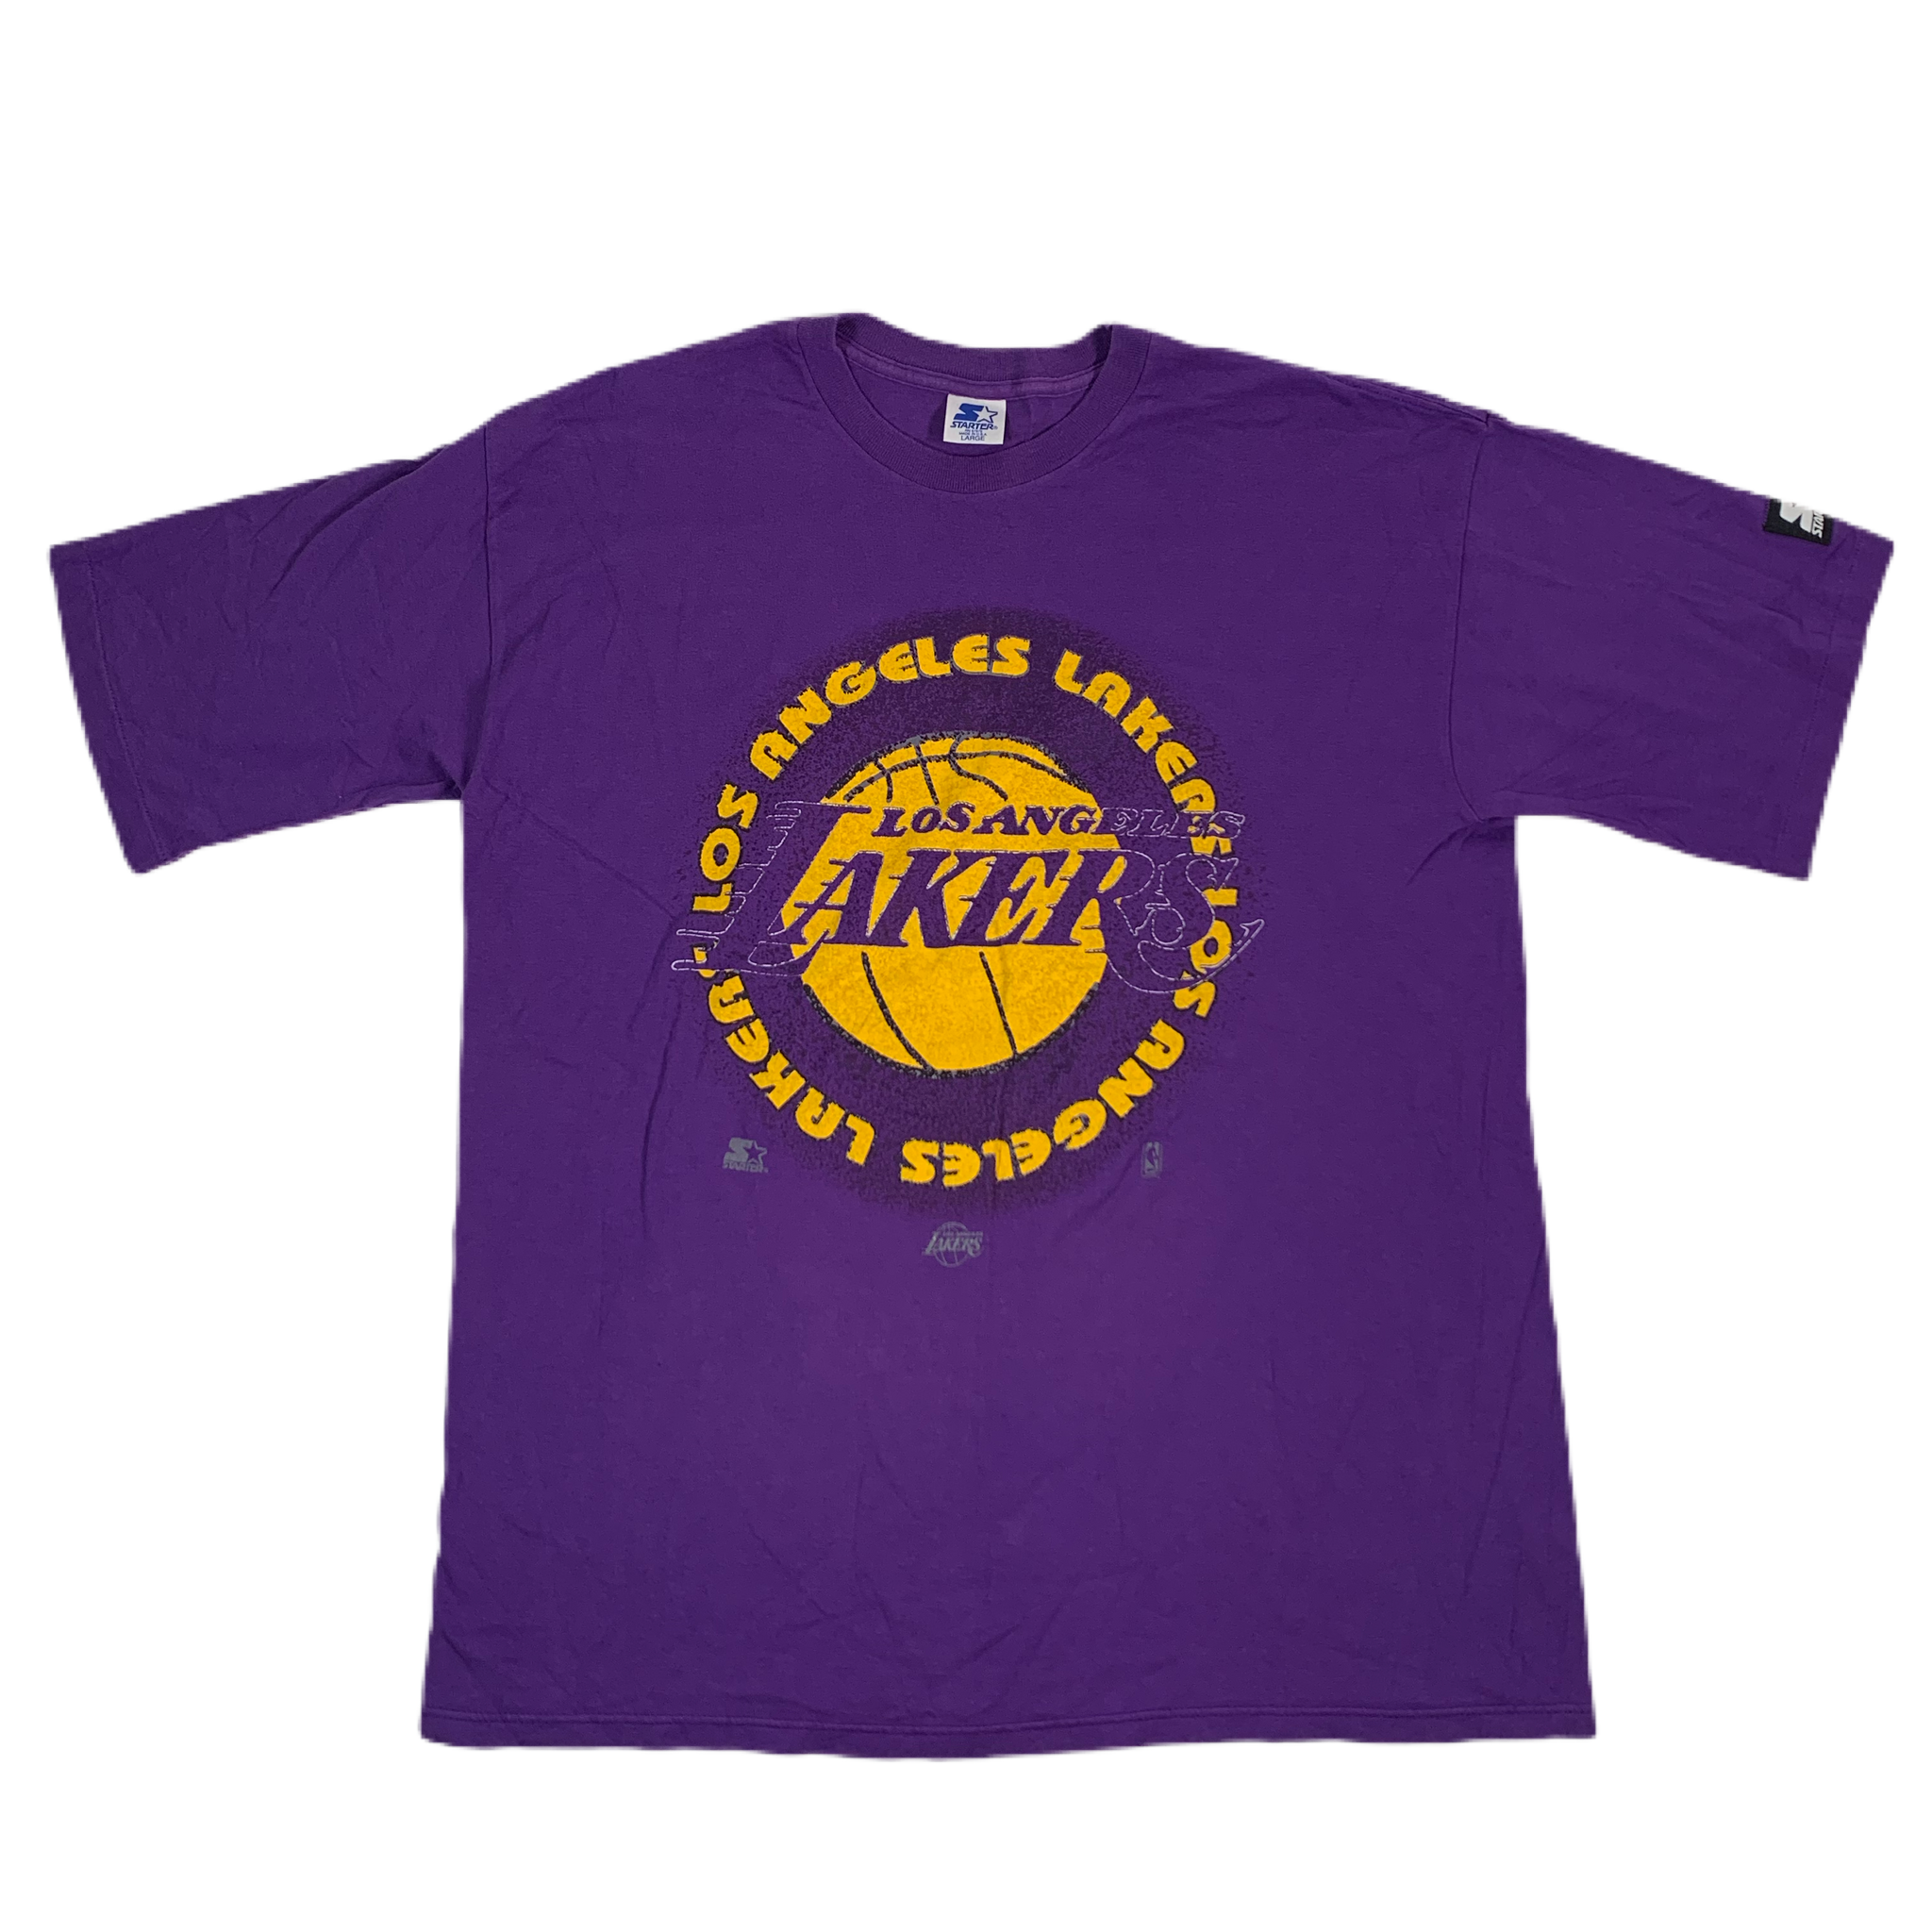 Vintage Los Angeles Lakers Starter T-Shirt